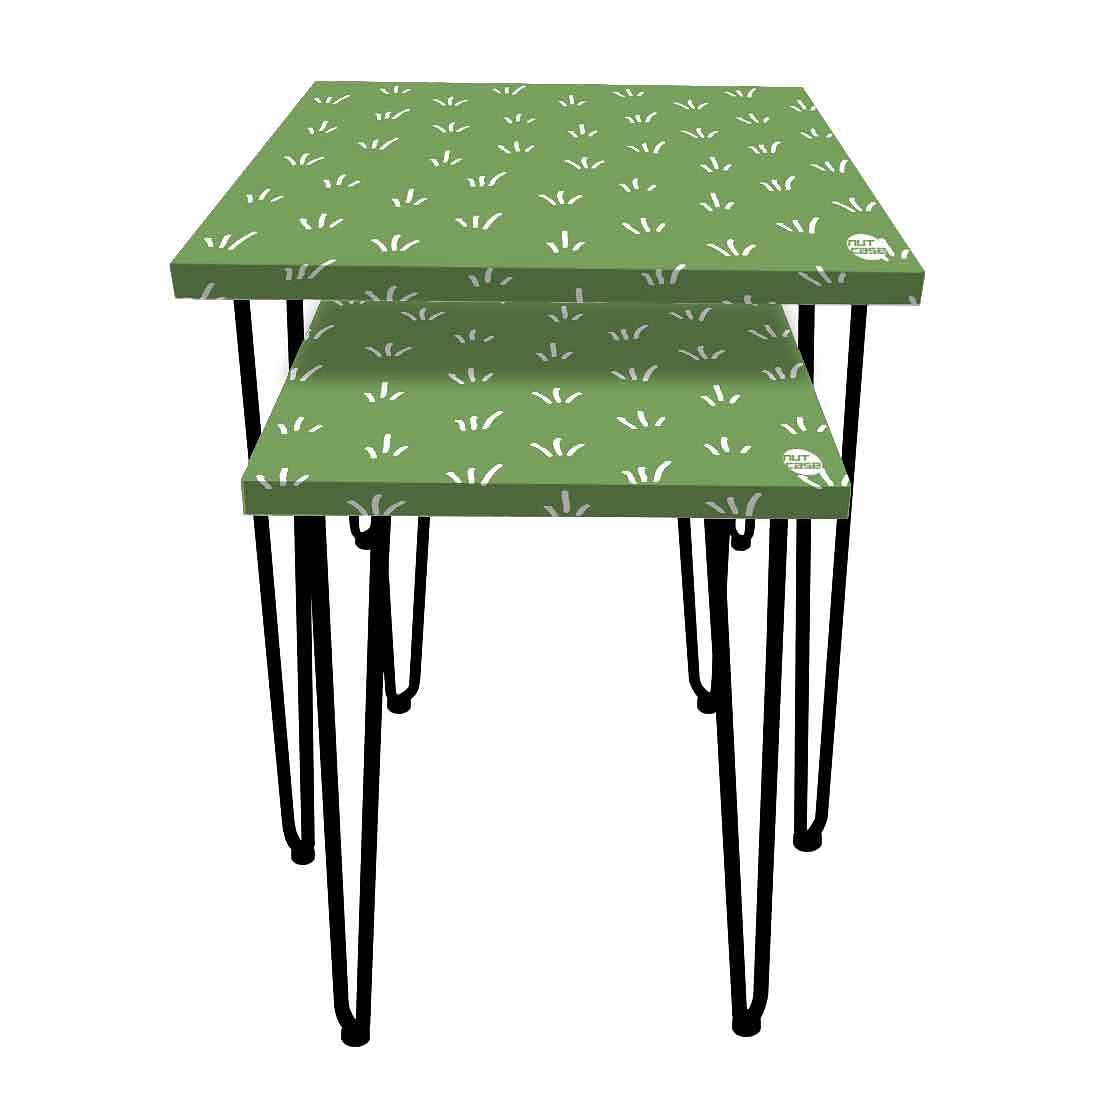 Nesting Tables 2 for Tea & Coffee Stool Home Balcony Decor - Green Grass Nutcase